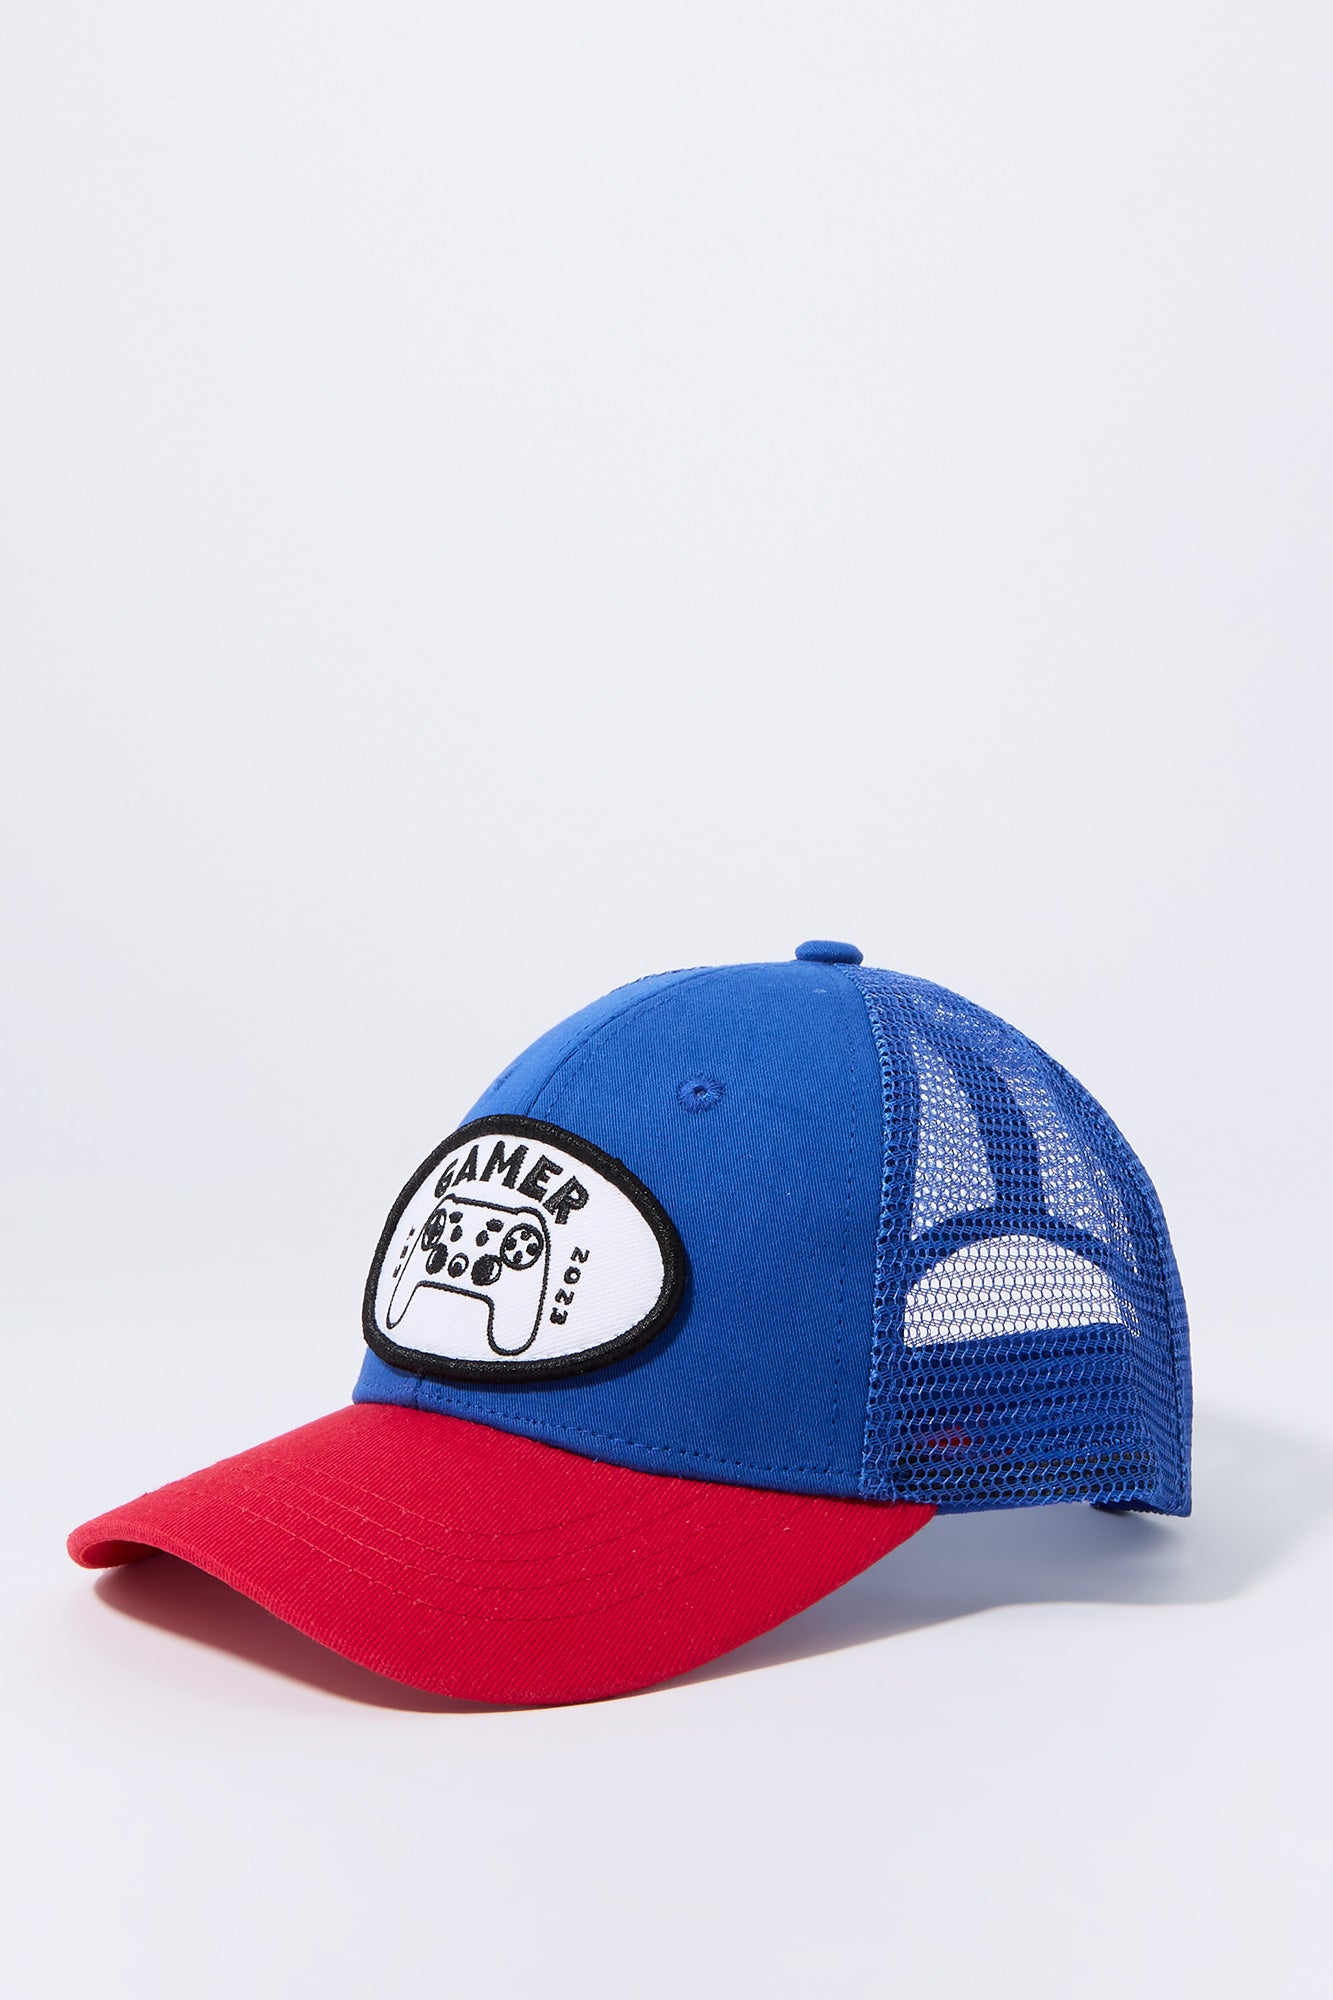 Boys Gamer Embroidered Baseball Hat